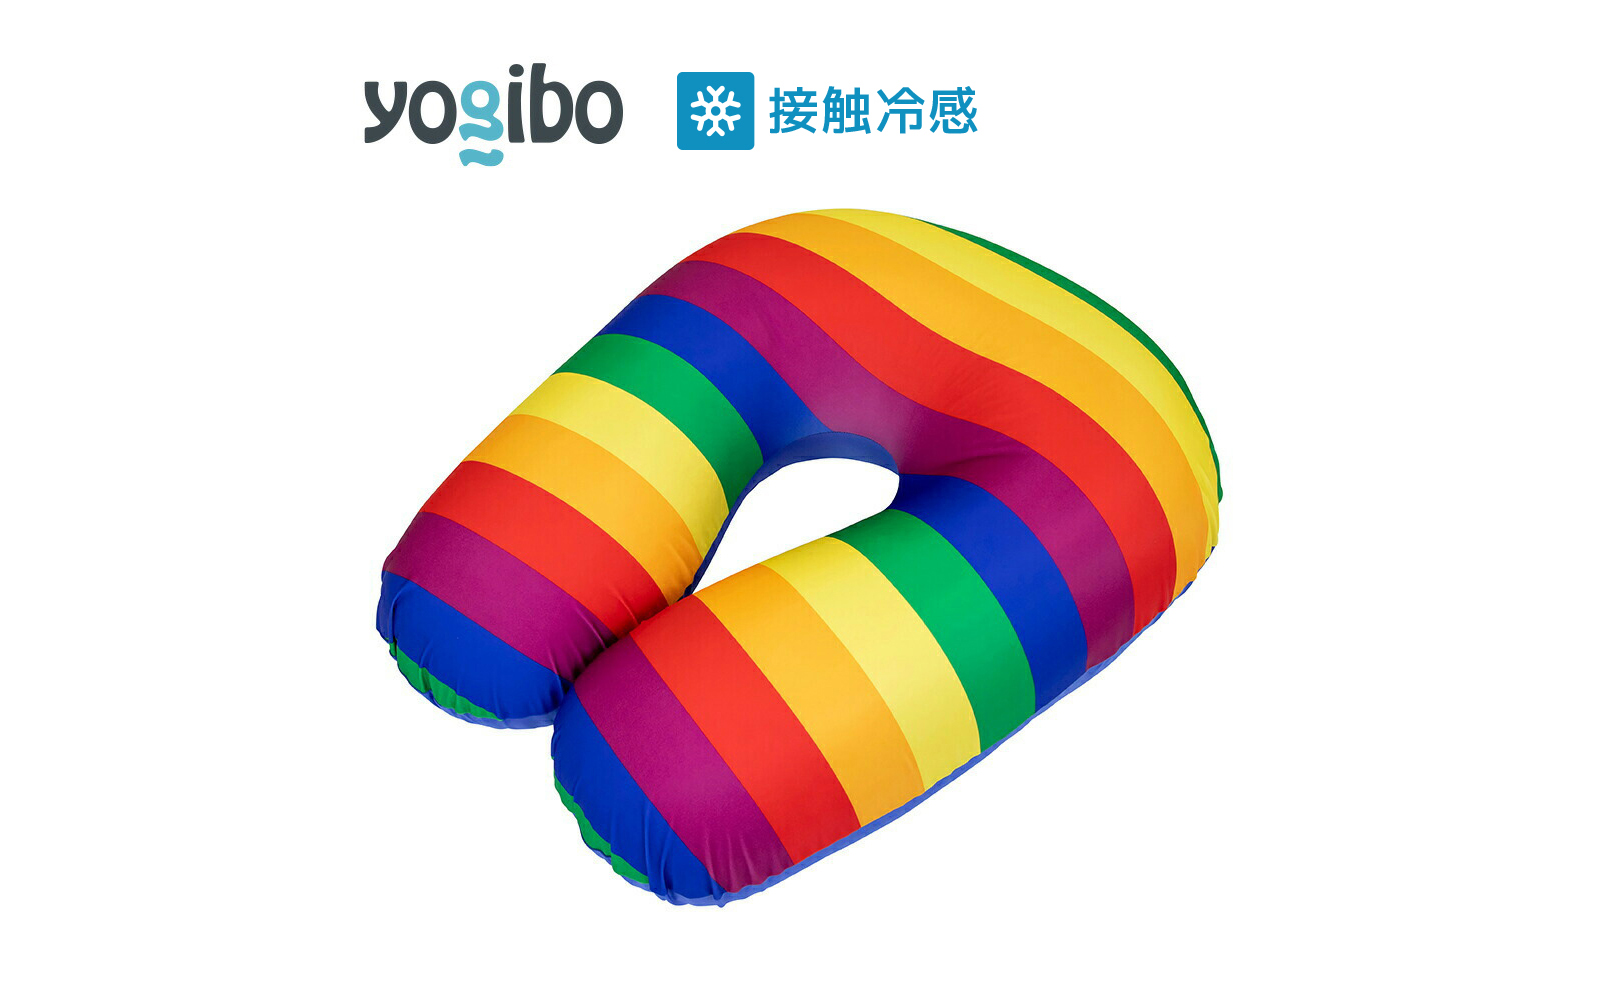 【Pride Edition】 Yogibo Zoola Support (ヨギボー ズーラ サポート) 